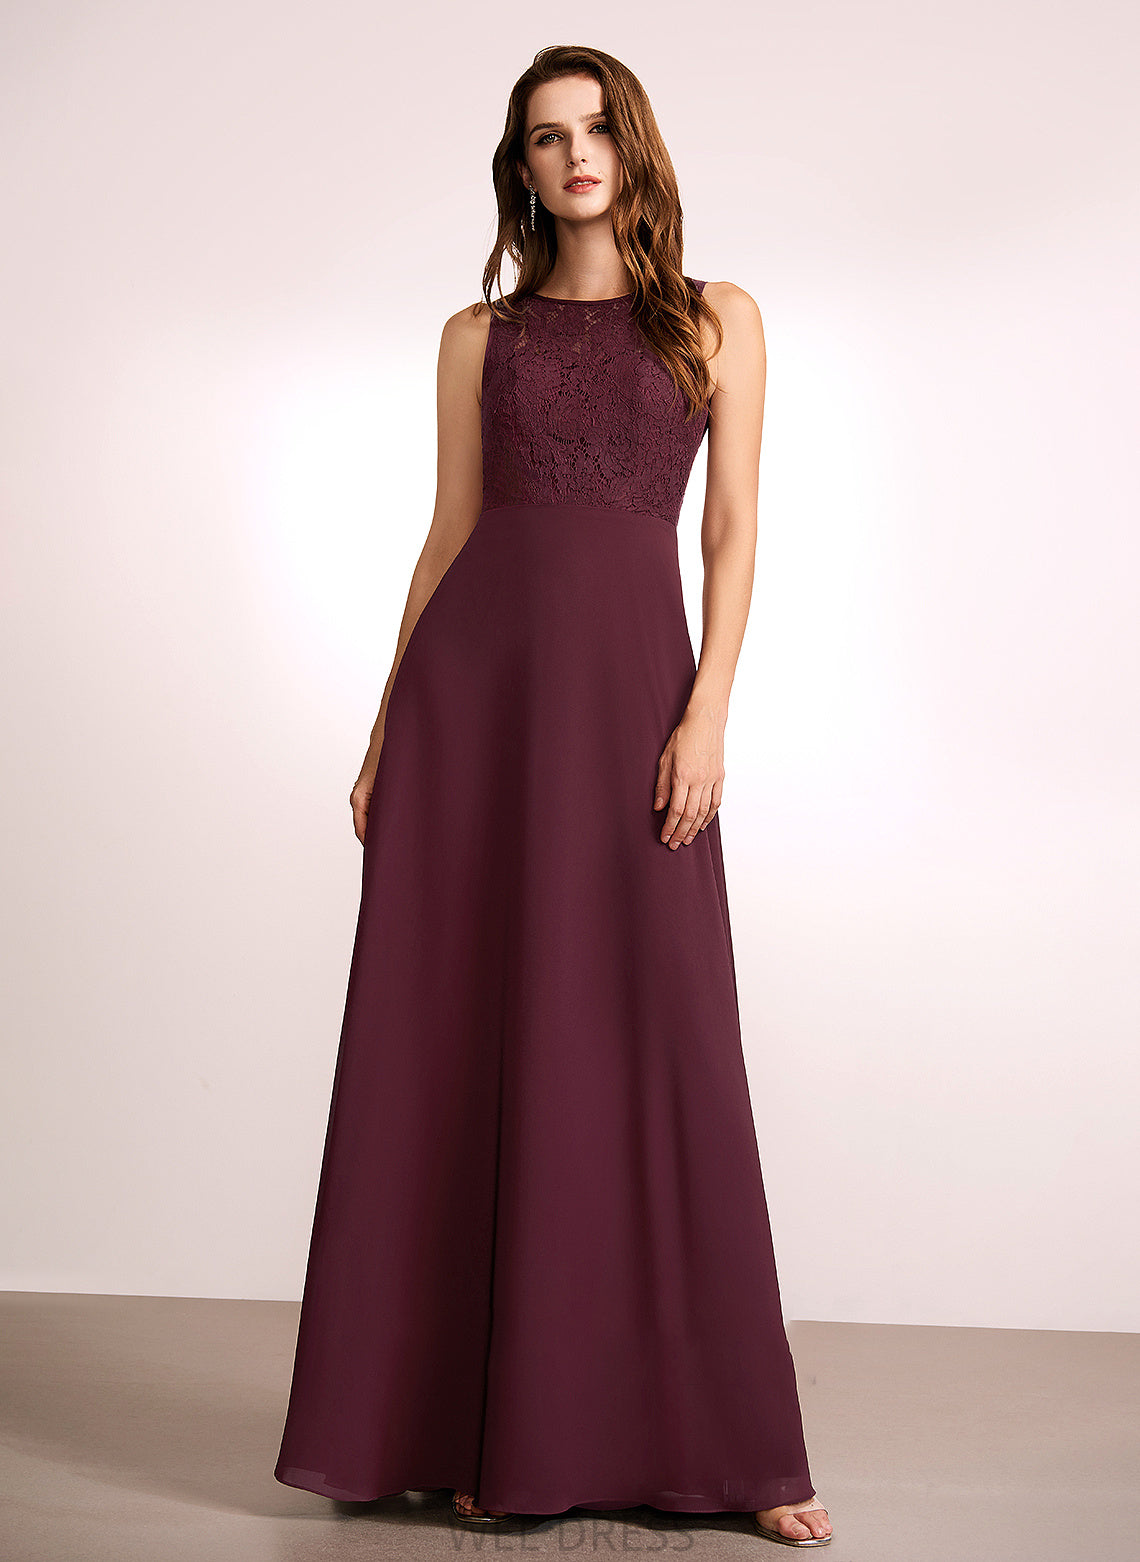 Lace Silhouette Fabric RegularStraps Floor-Length Length Sleeve Straps A-Line Summer V-Neck A-Line/Princess